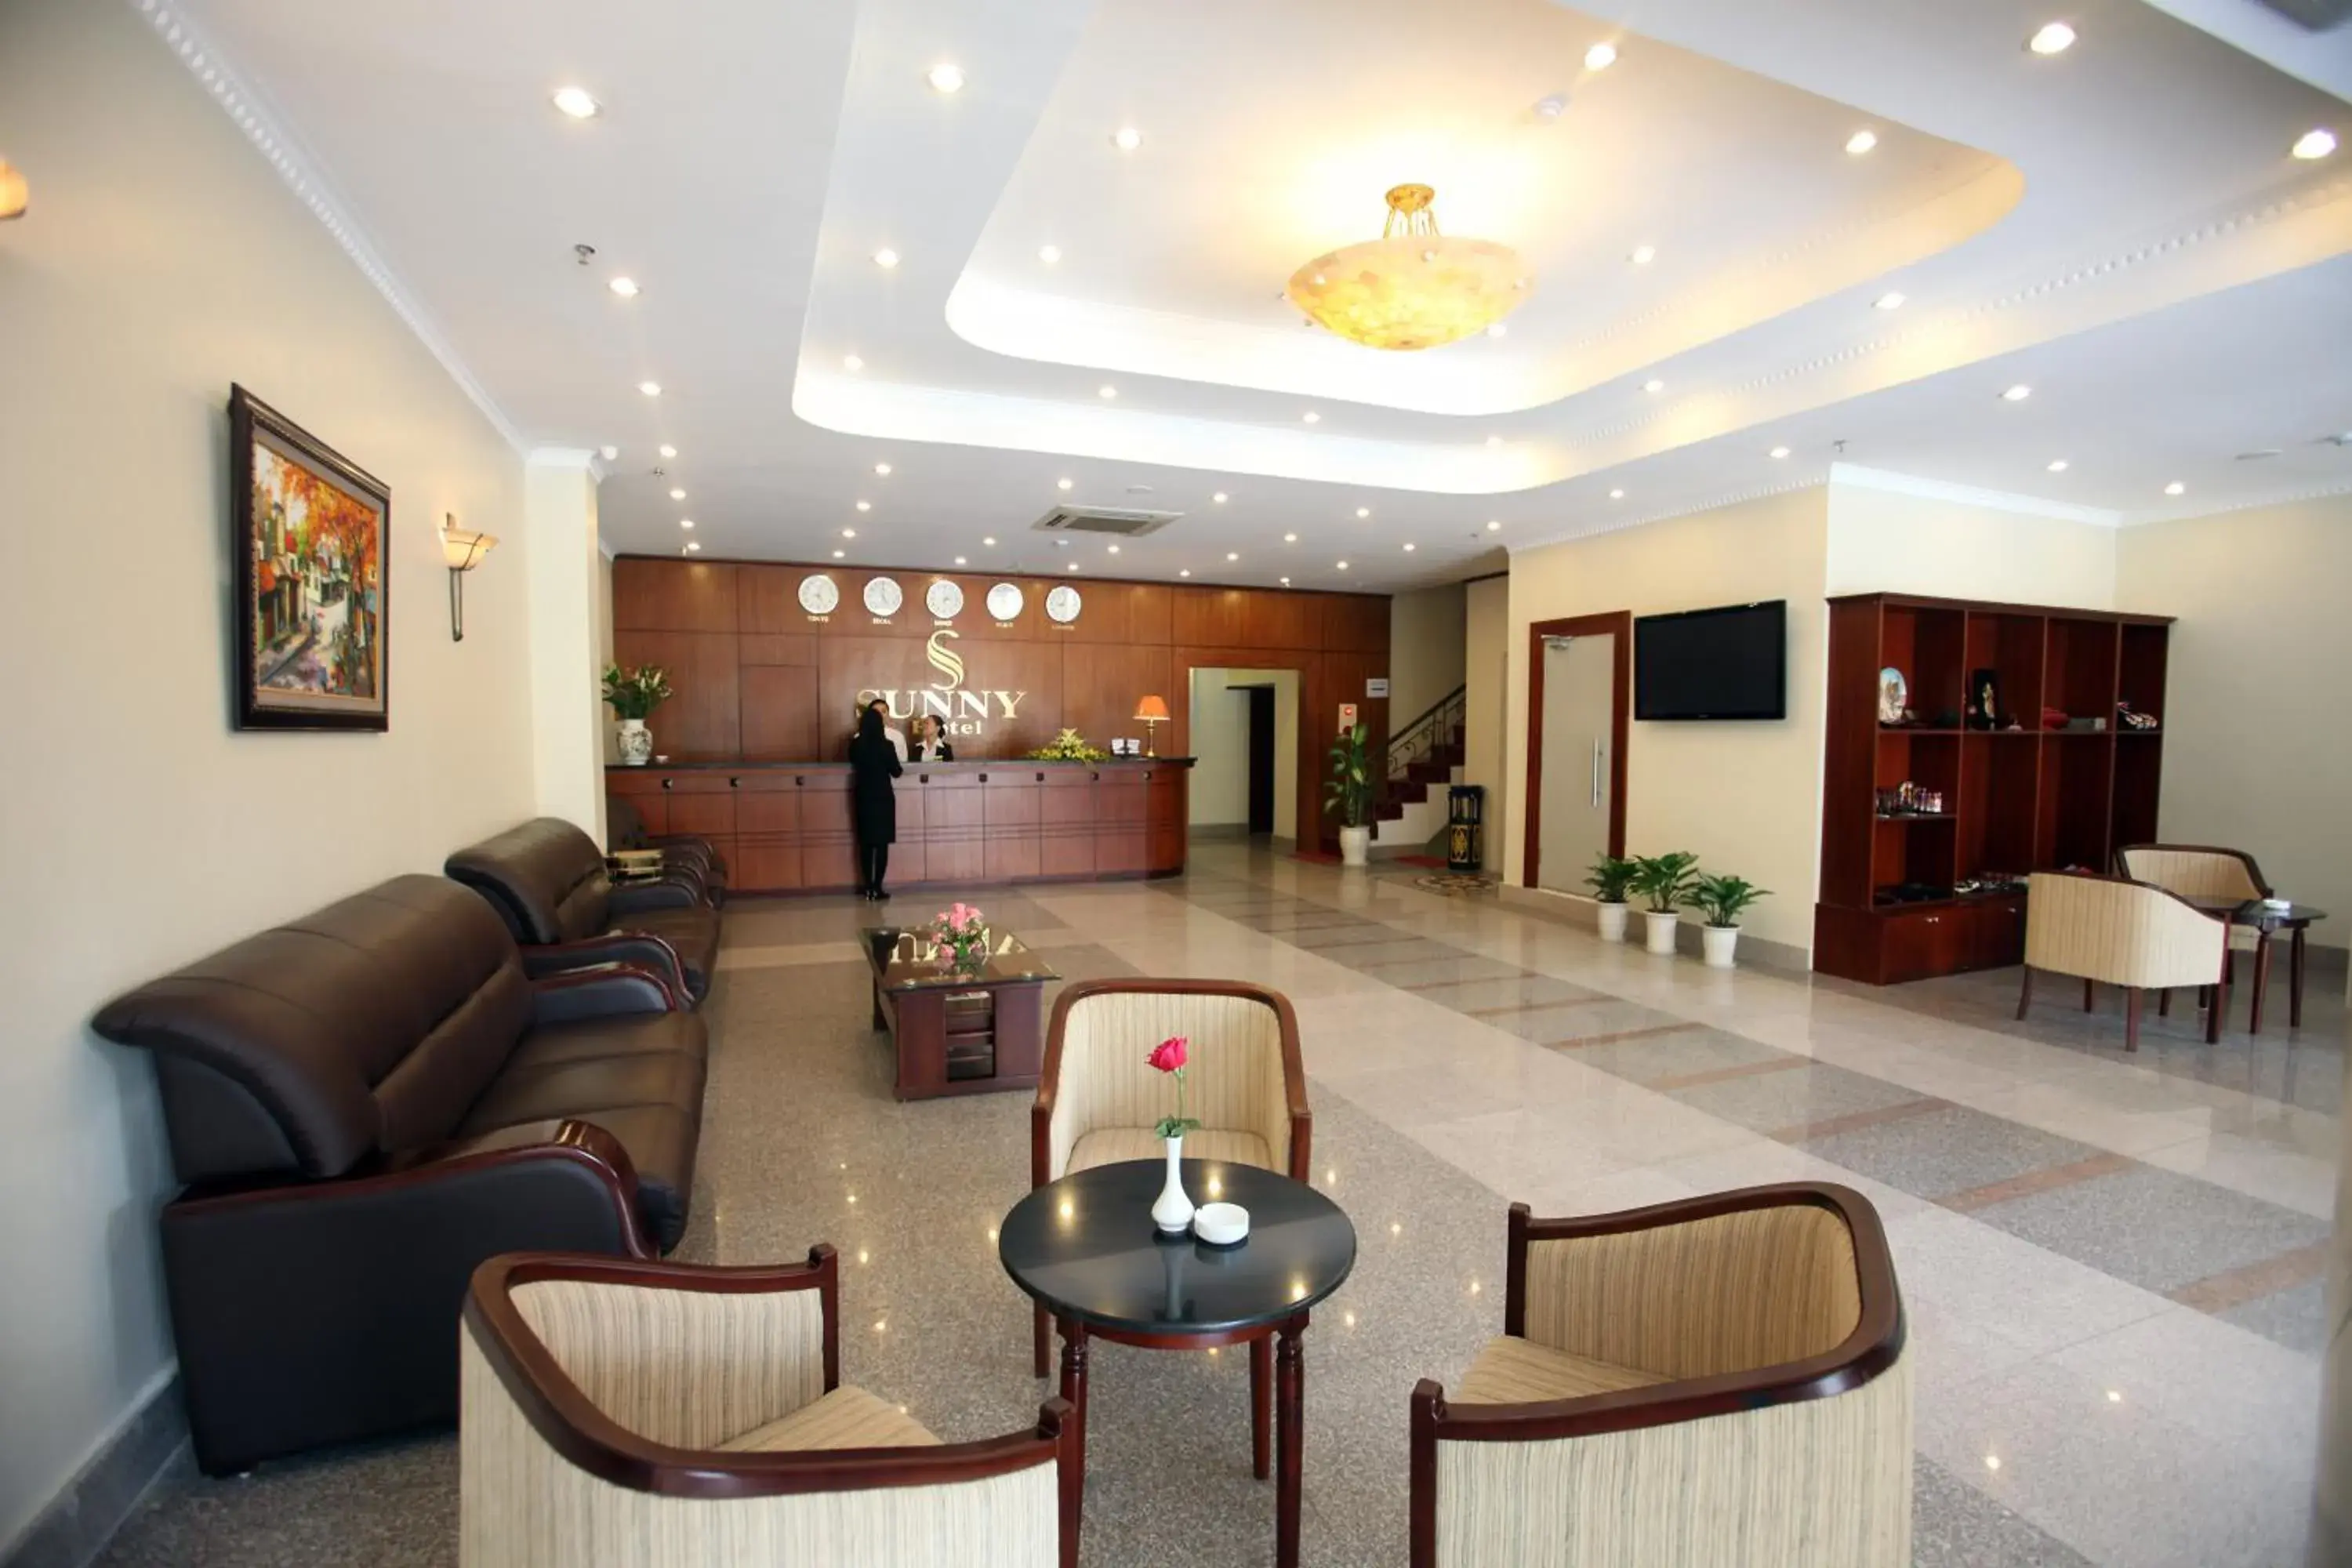 Lobby or reception, Lobby/Reception in Sunny 3 Hotel